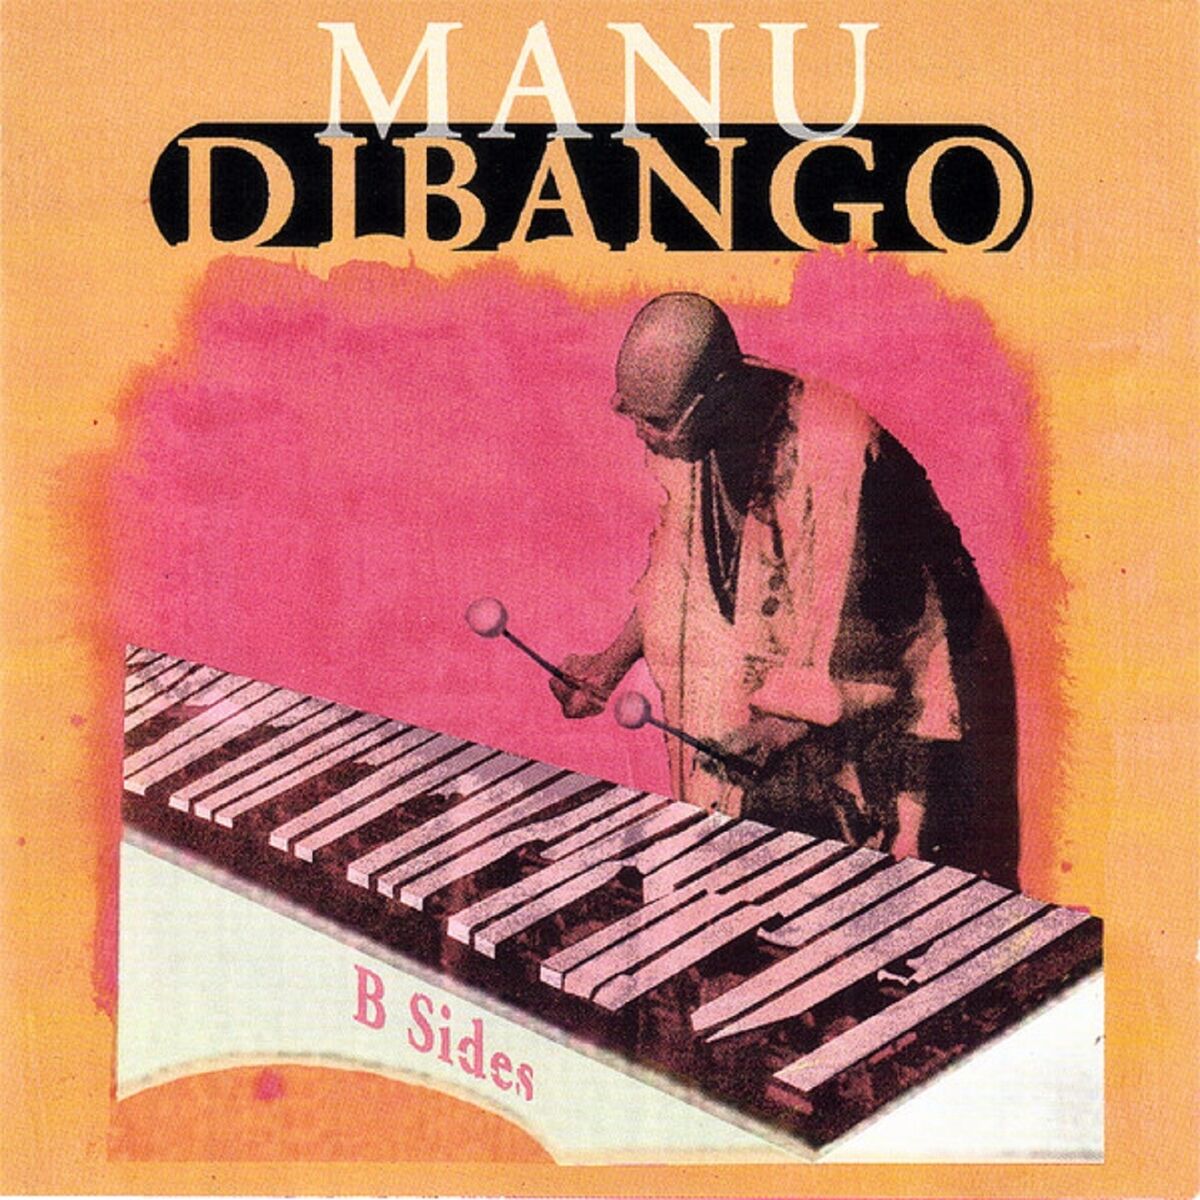 Manu Dibango: albums, songs, playlists | Listen on Deezer